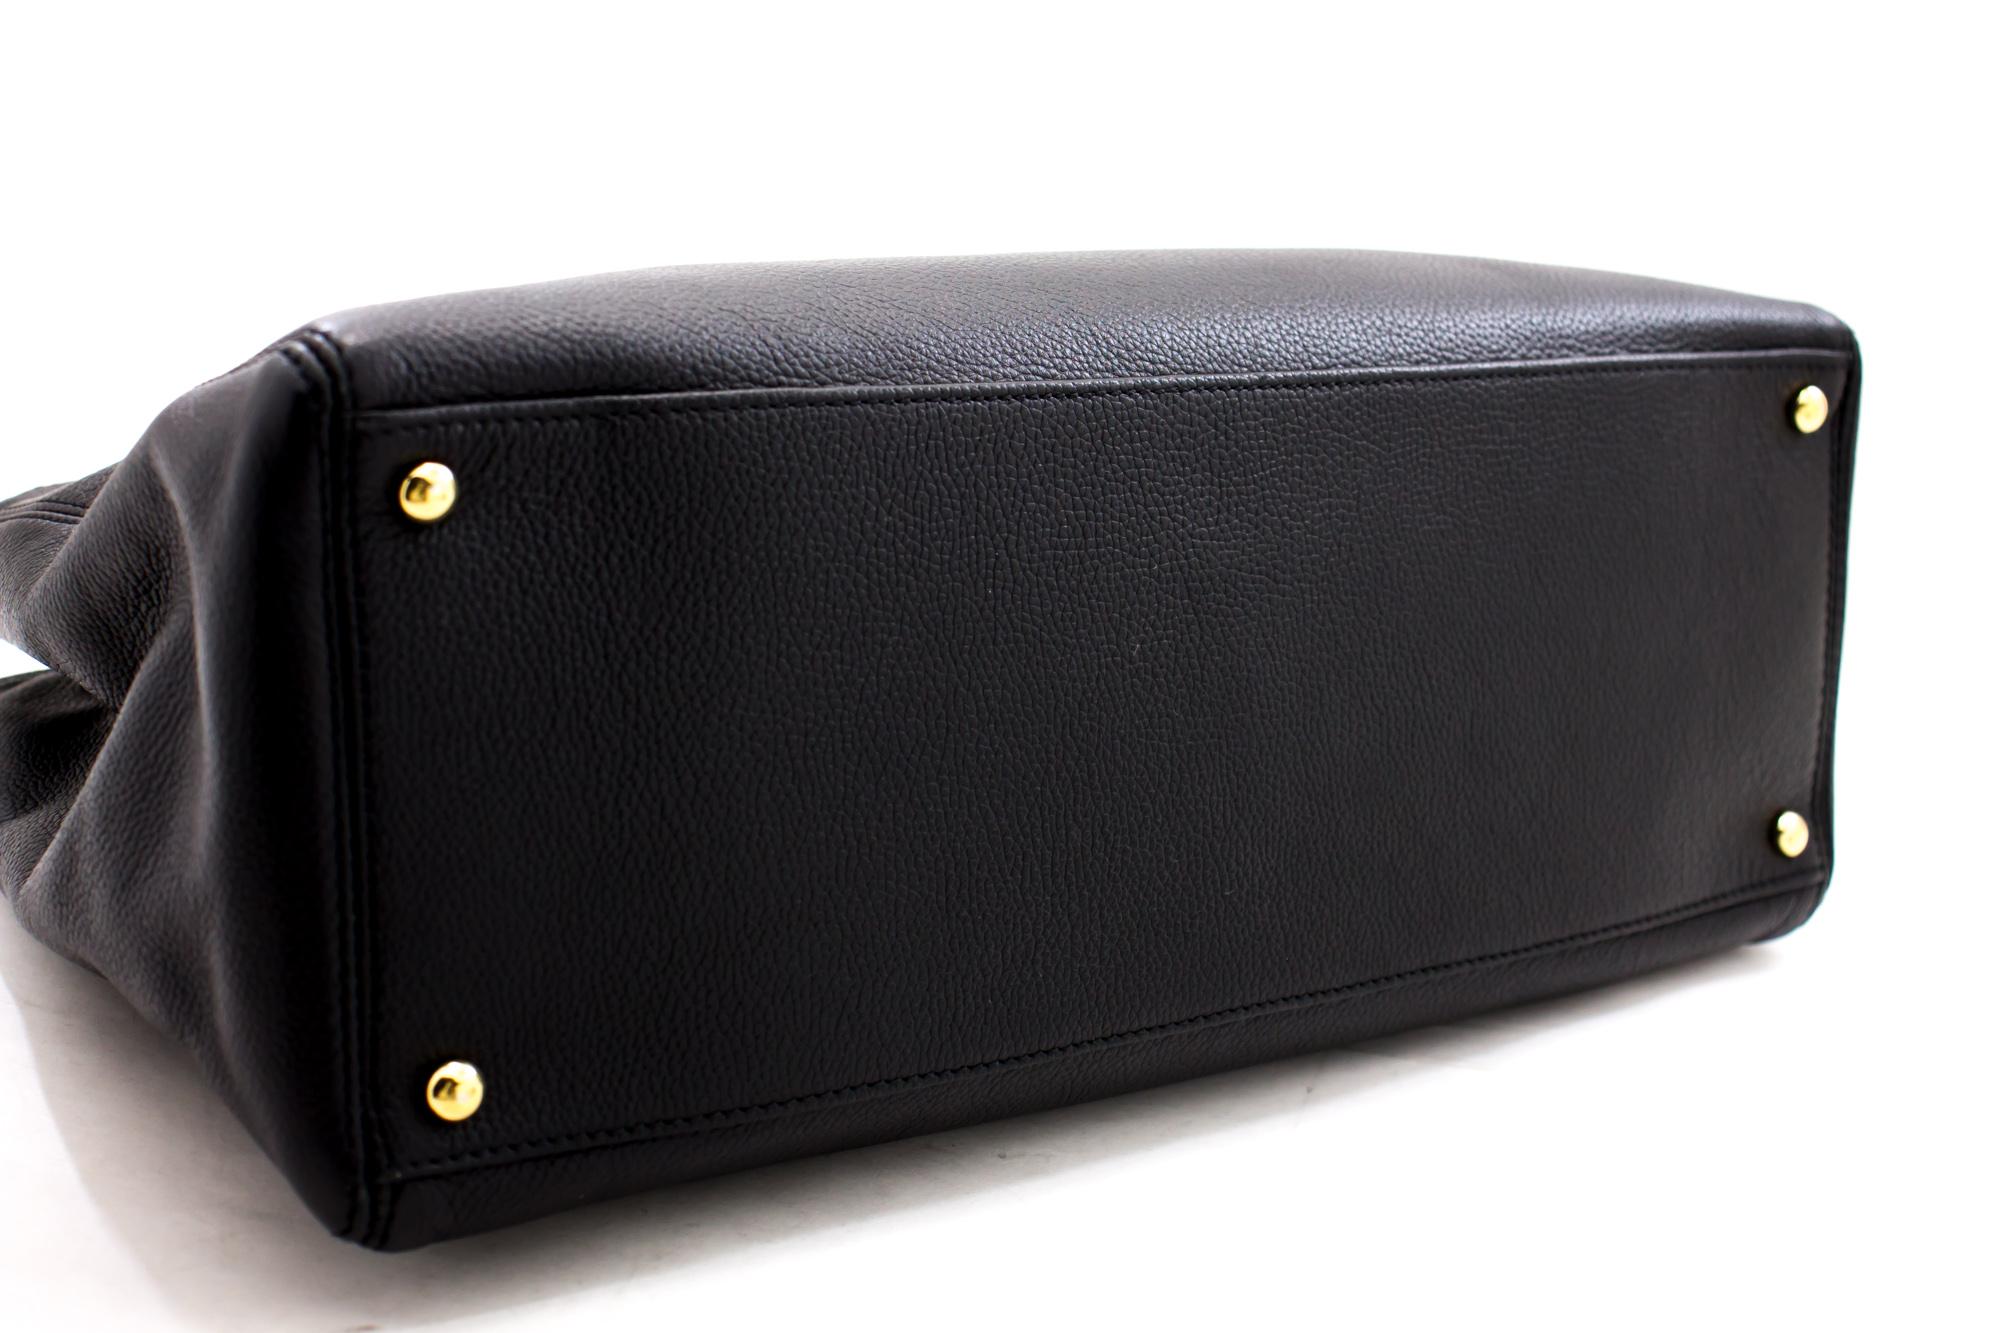 Women's CHANEL Executive Tote Caviar Shoulder Bag Handbag Black Gold Strap